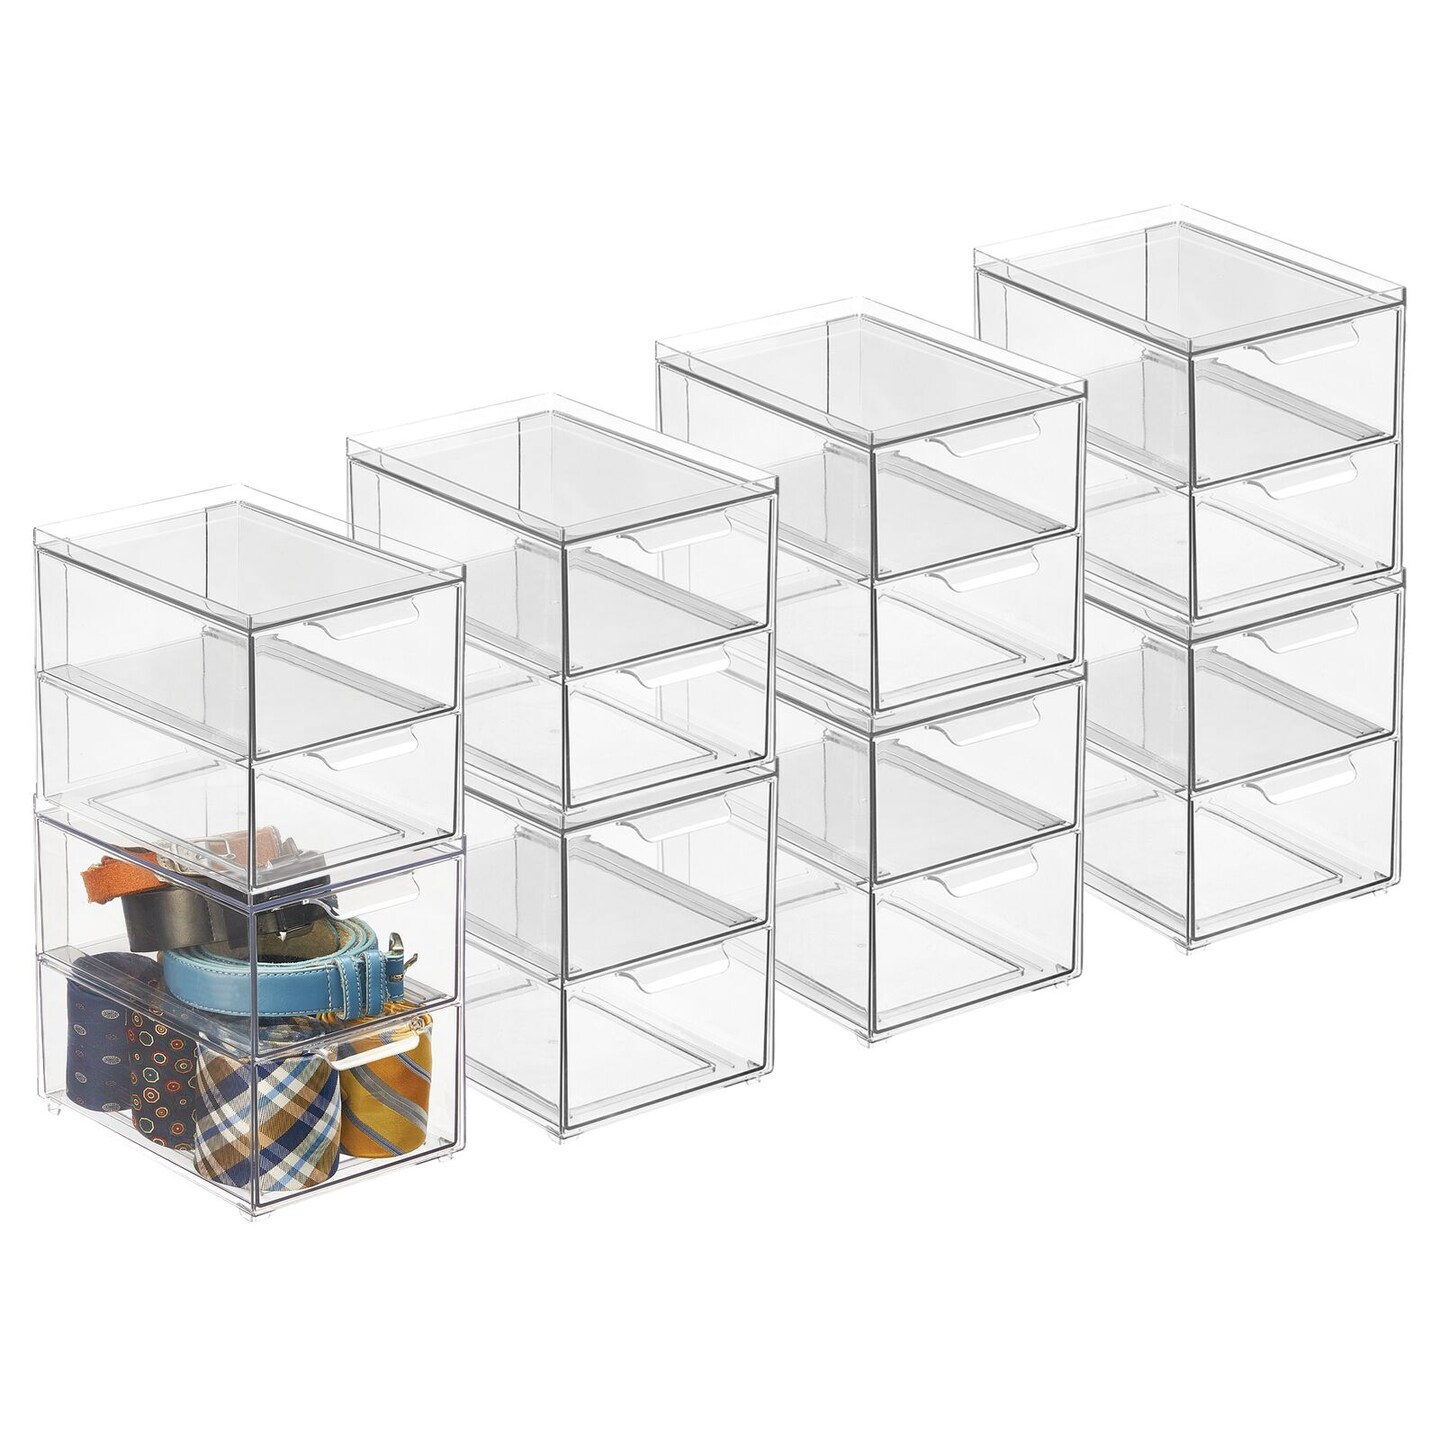 mDesign mdesign plastic stackable bathroom storage organizer bin